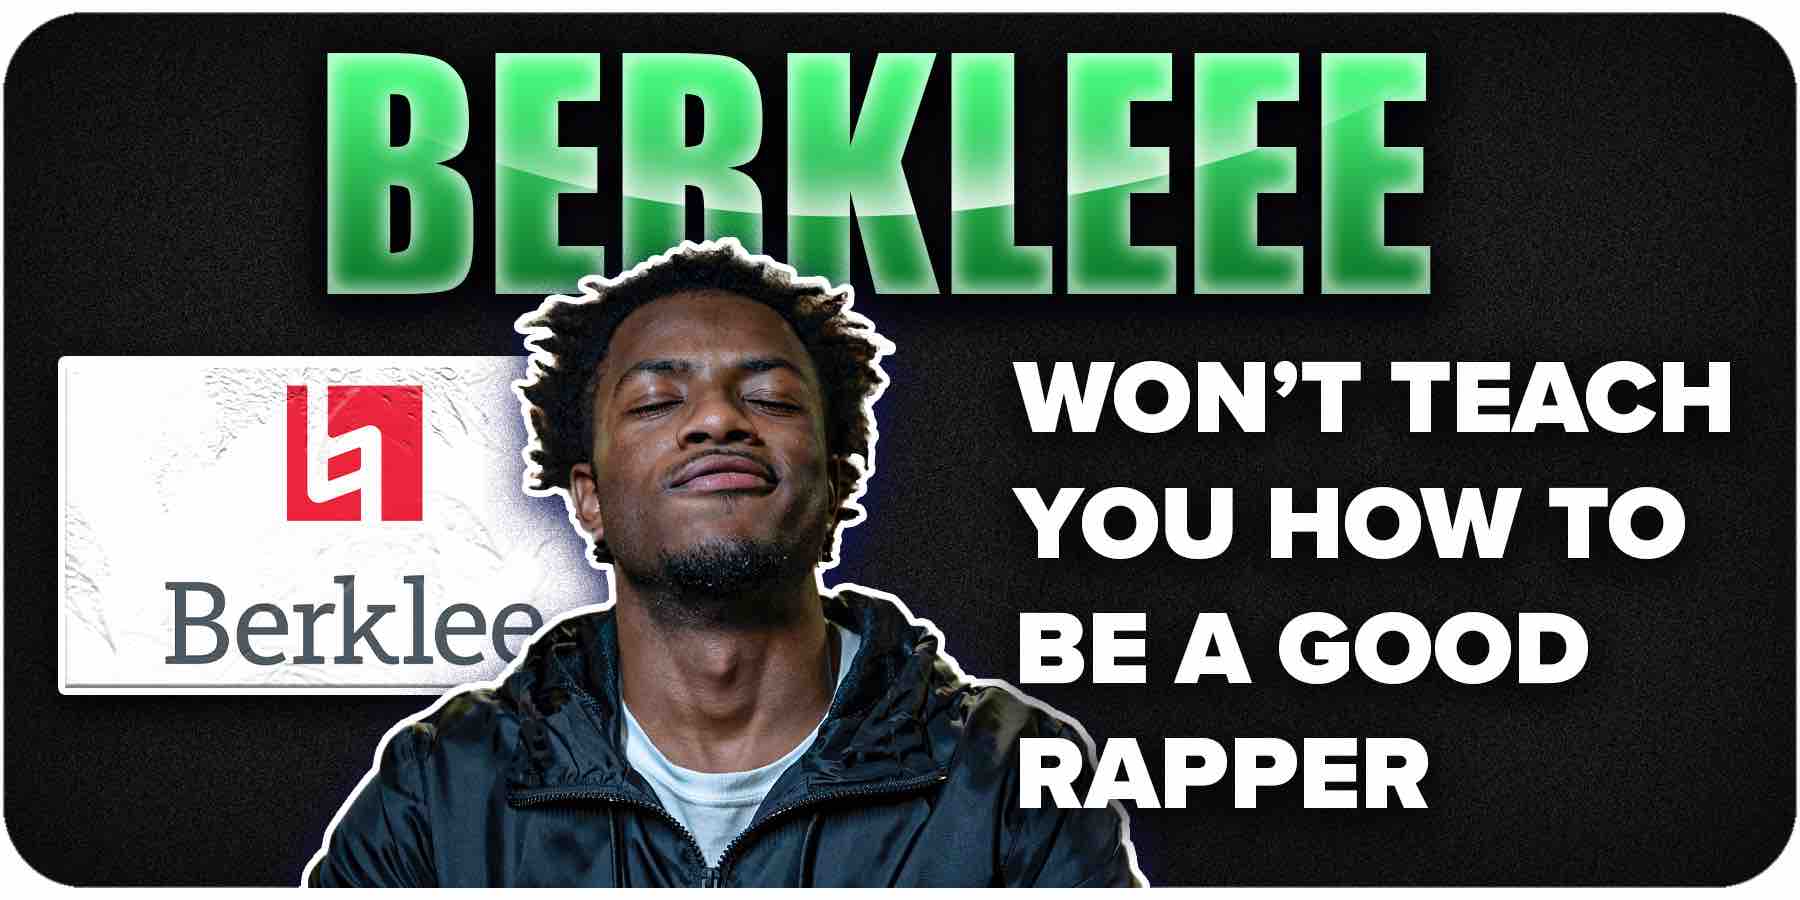 Berklee wont teach you to rap